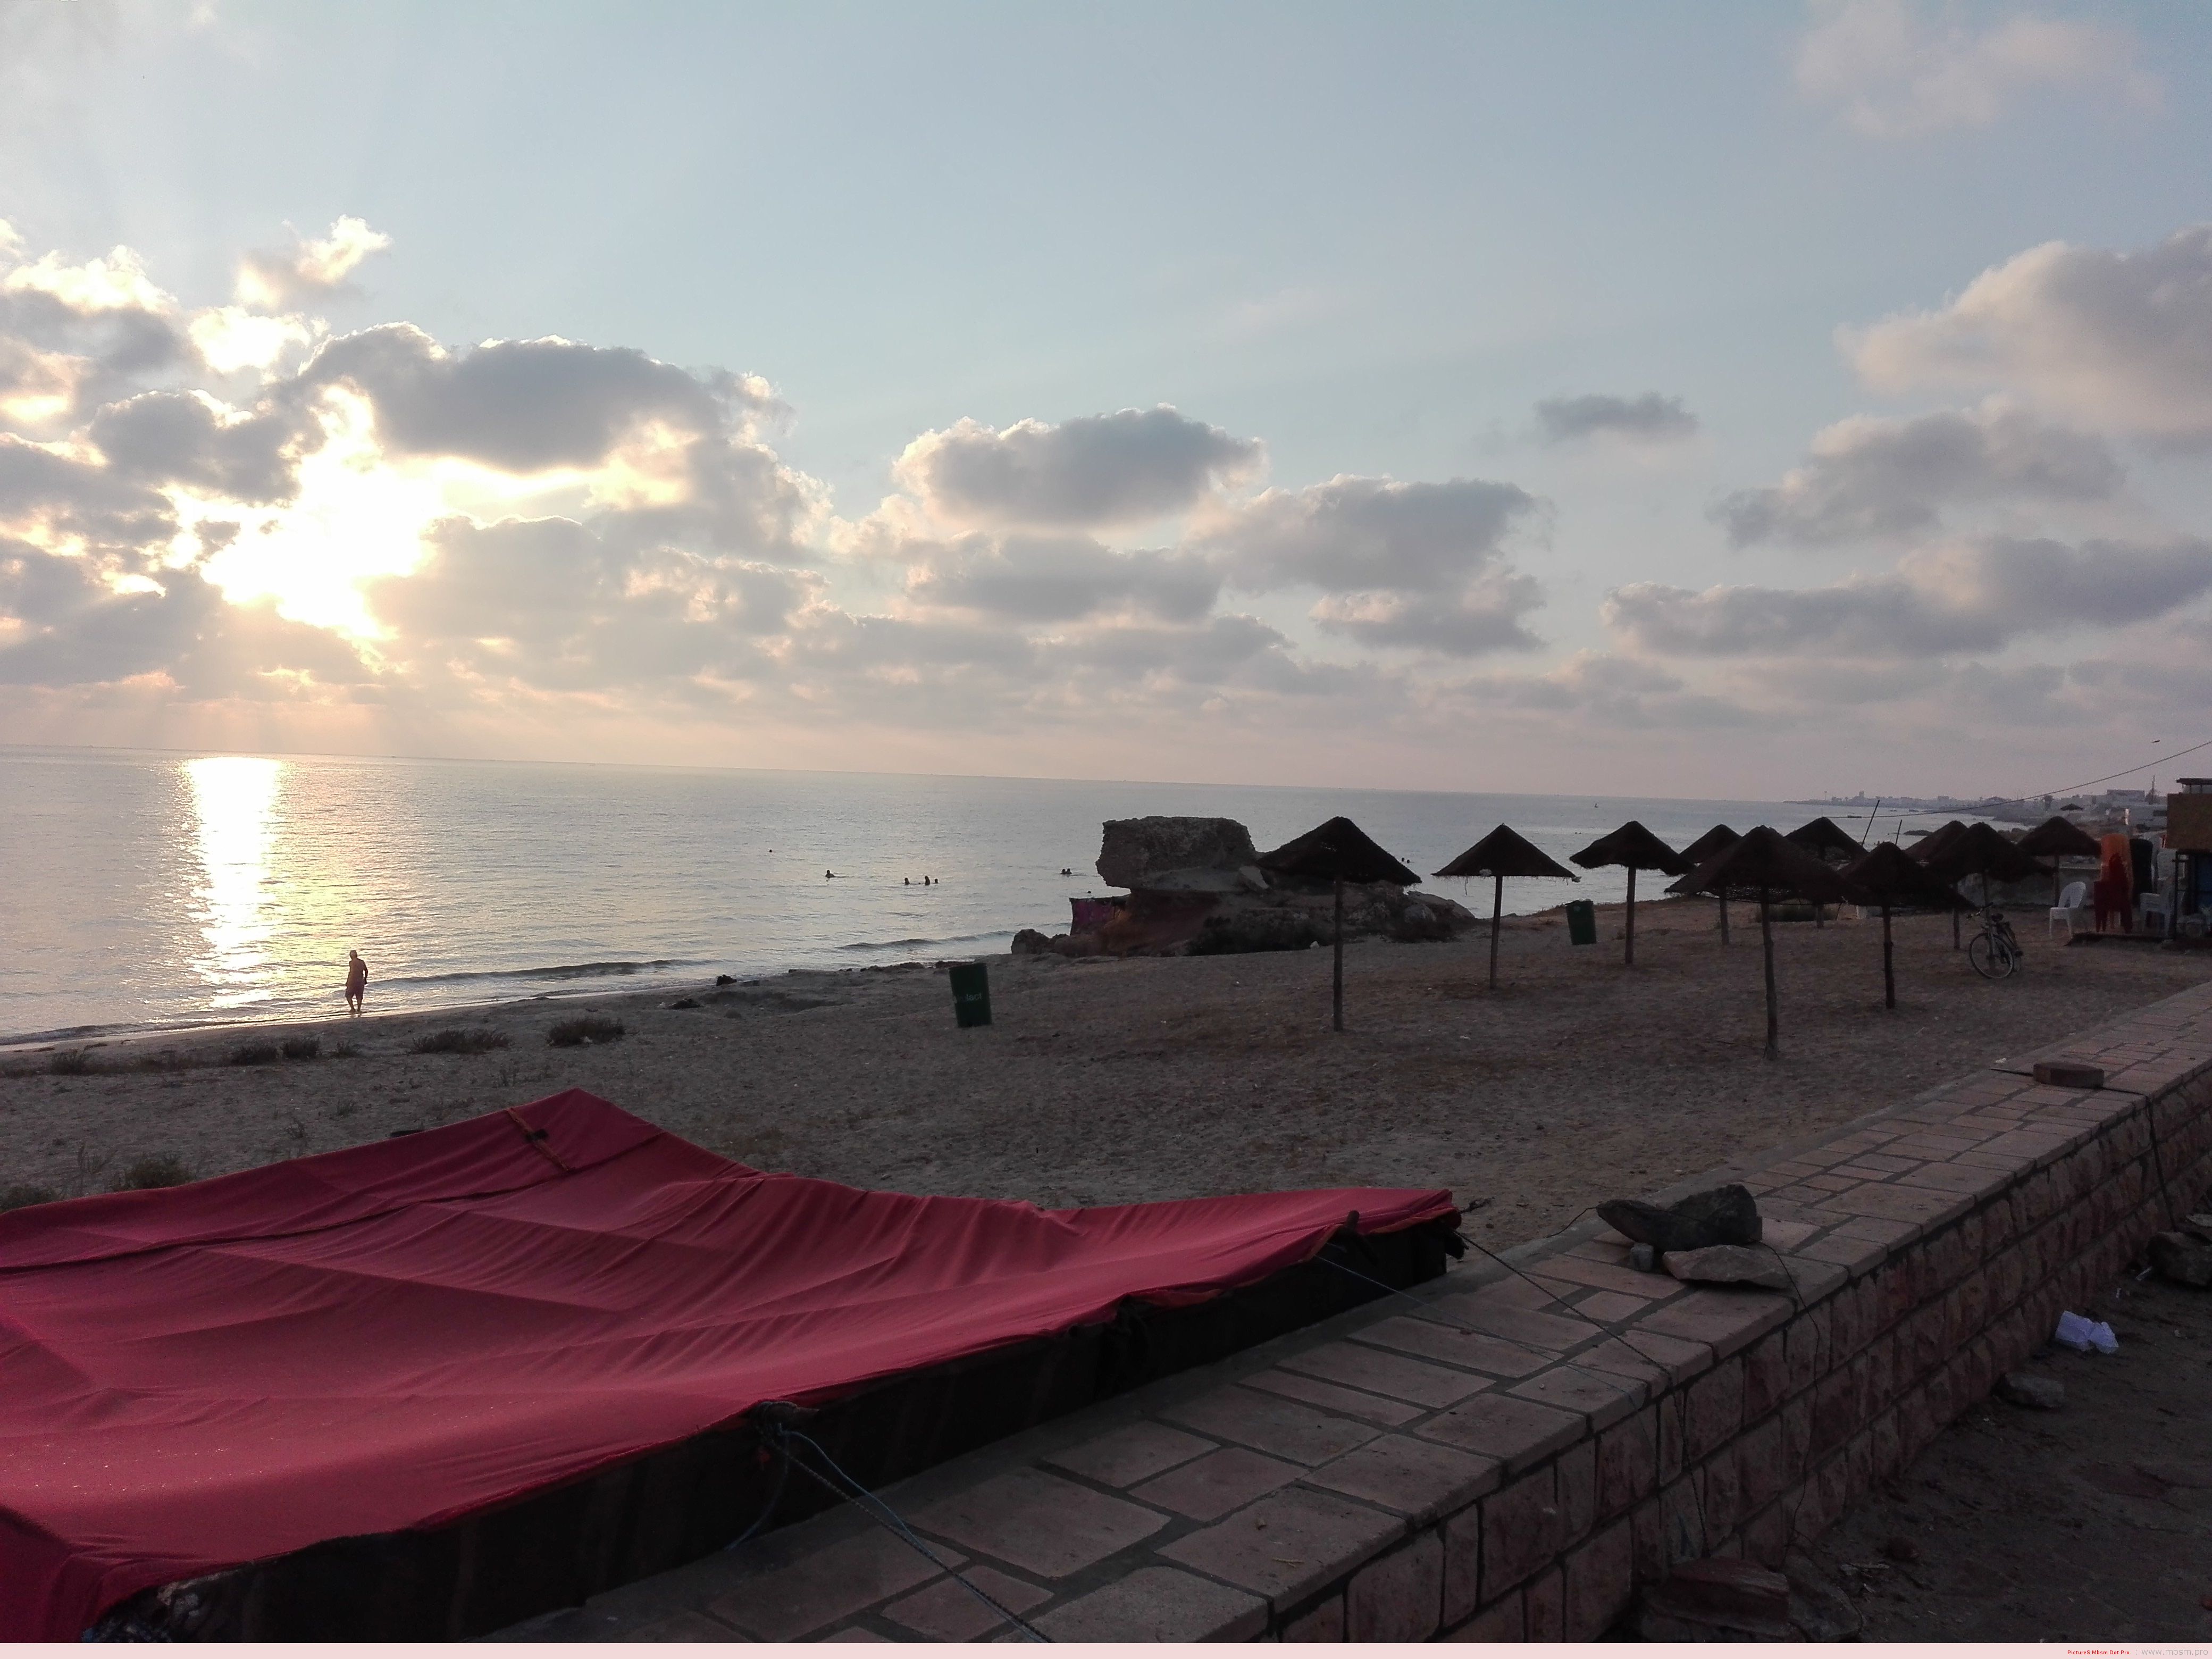 mbsm-pro--images-de-plage--chebba--mahdia--tunisia--aot-2018-mbsm-dot-pro